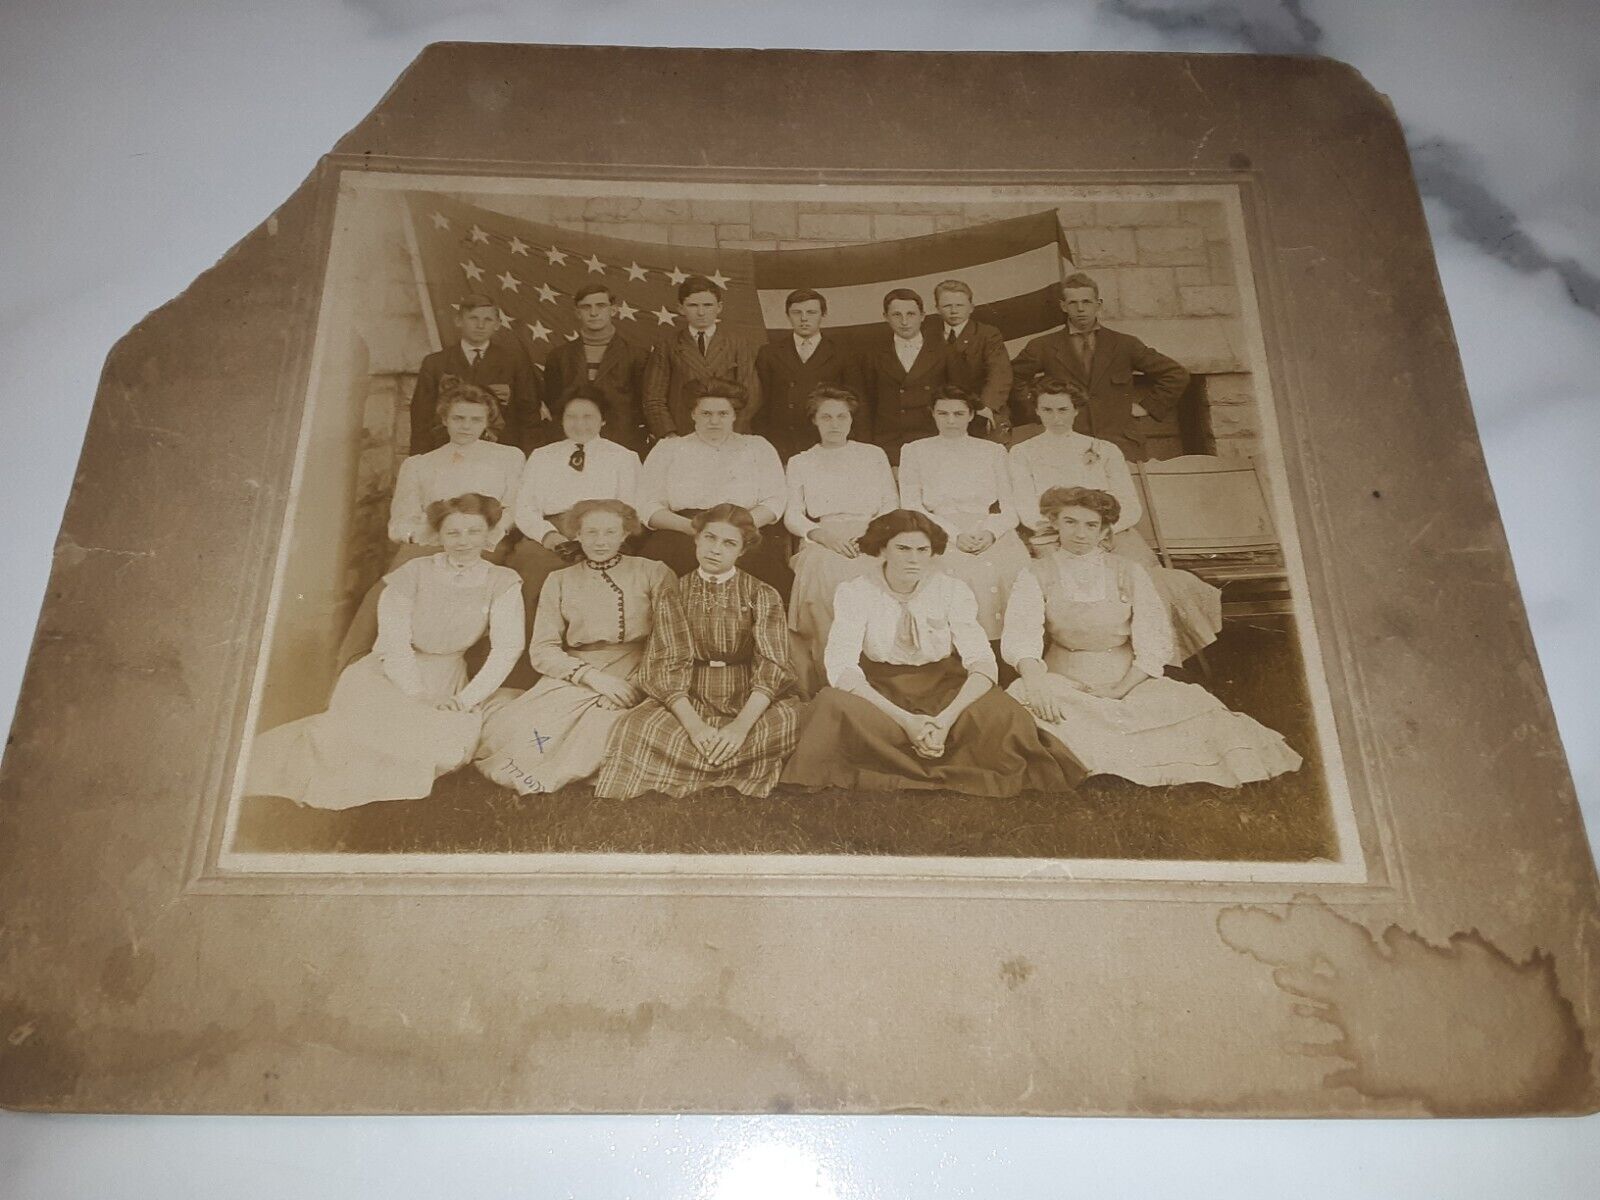 1912 Press Photo Girls of  school graduating class, unsure location bin120